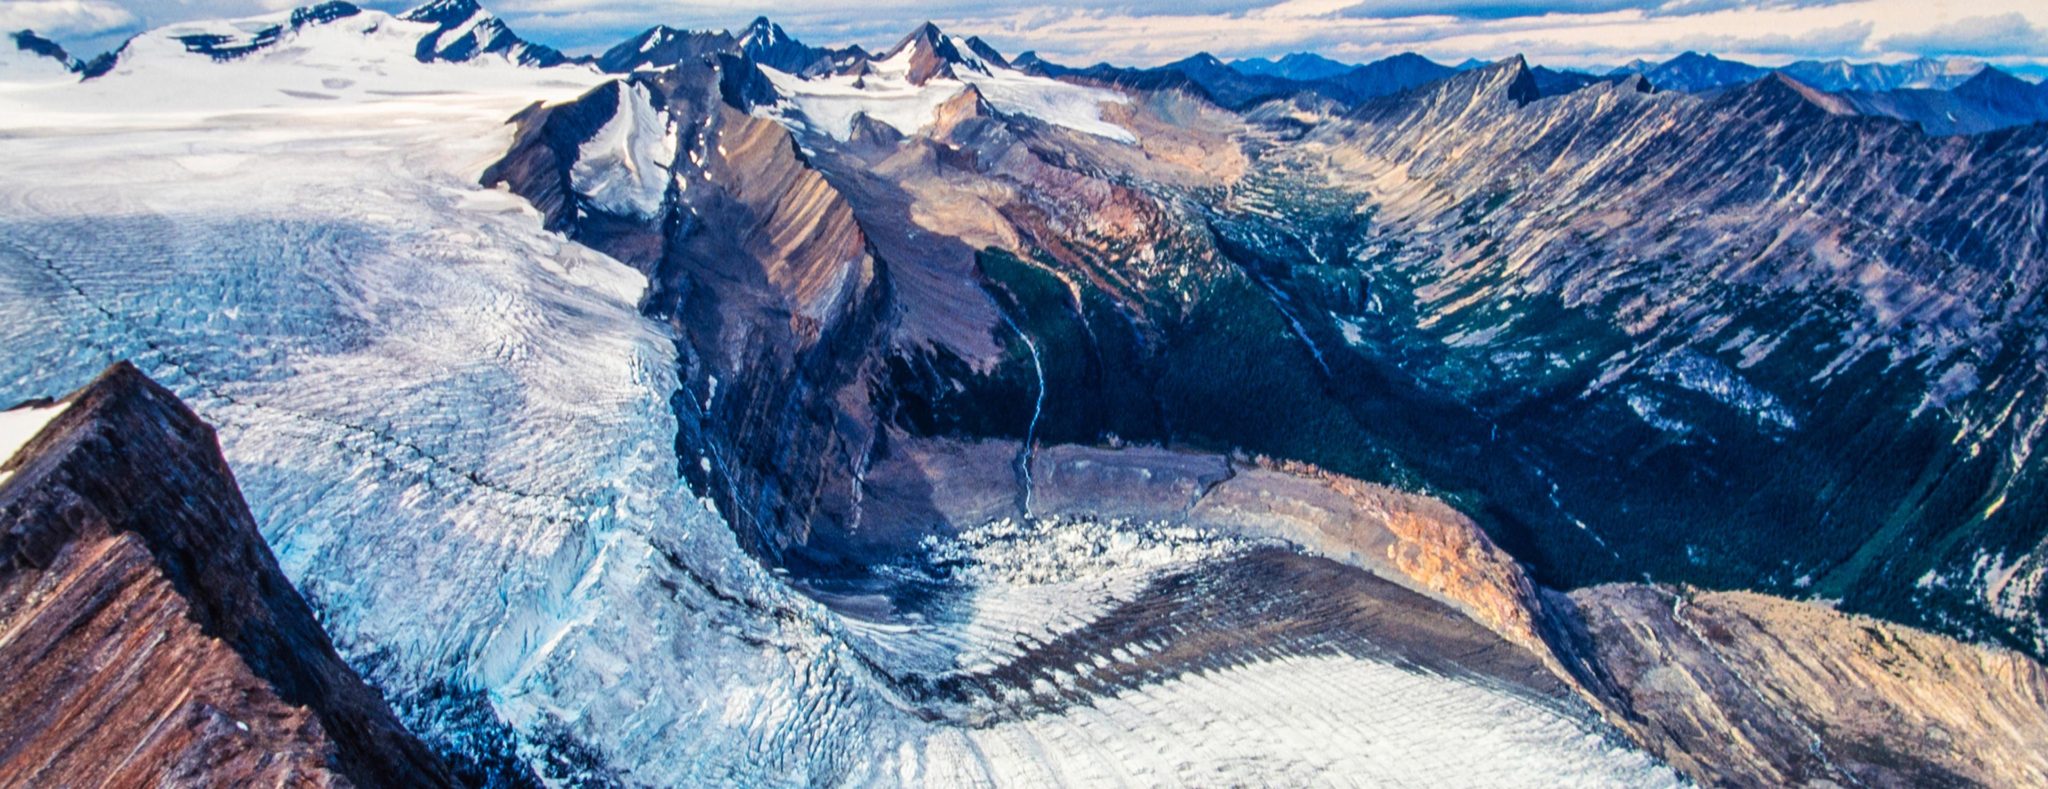 Icefield Glacier - Jasper National Park Canada